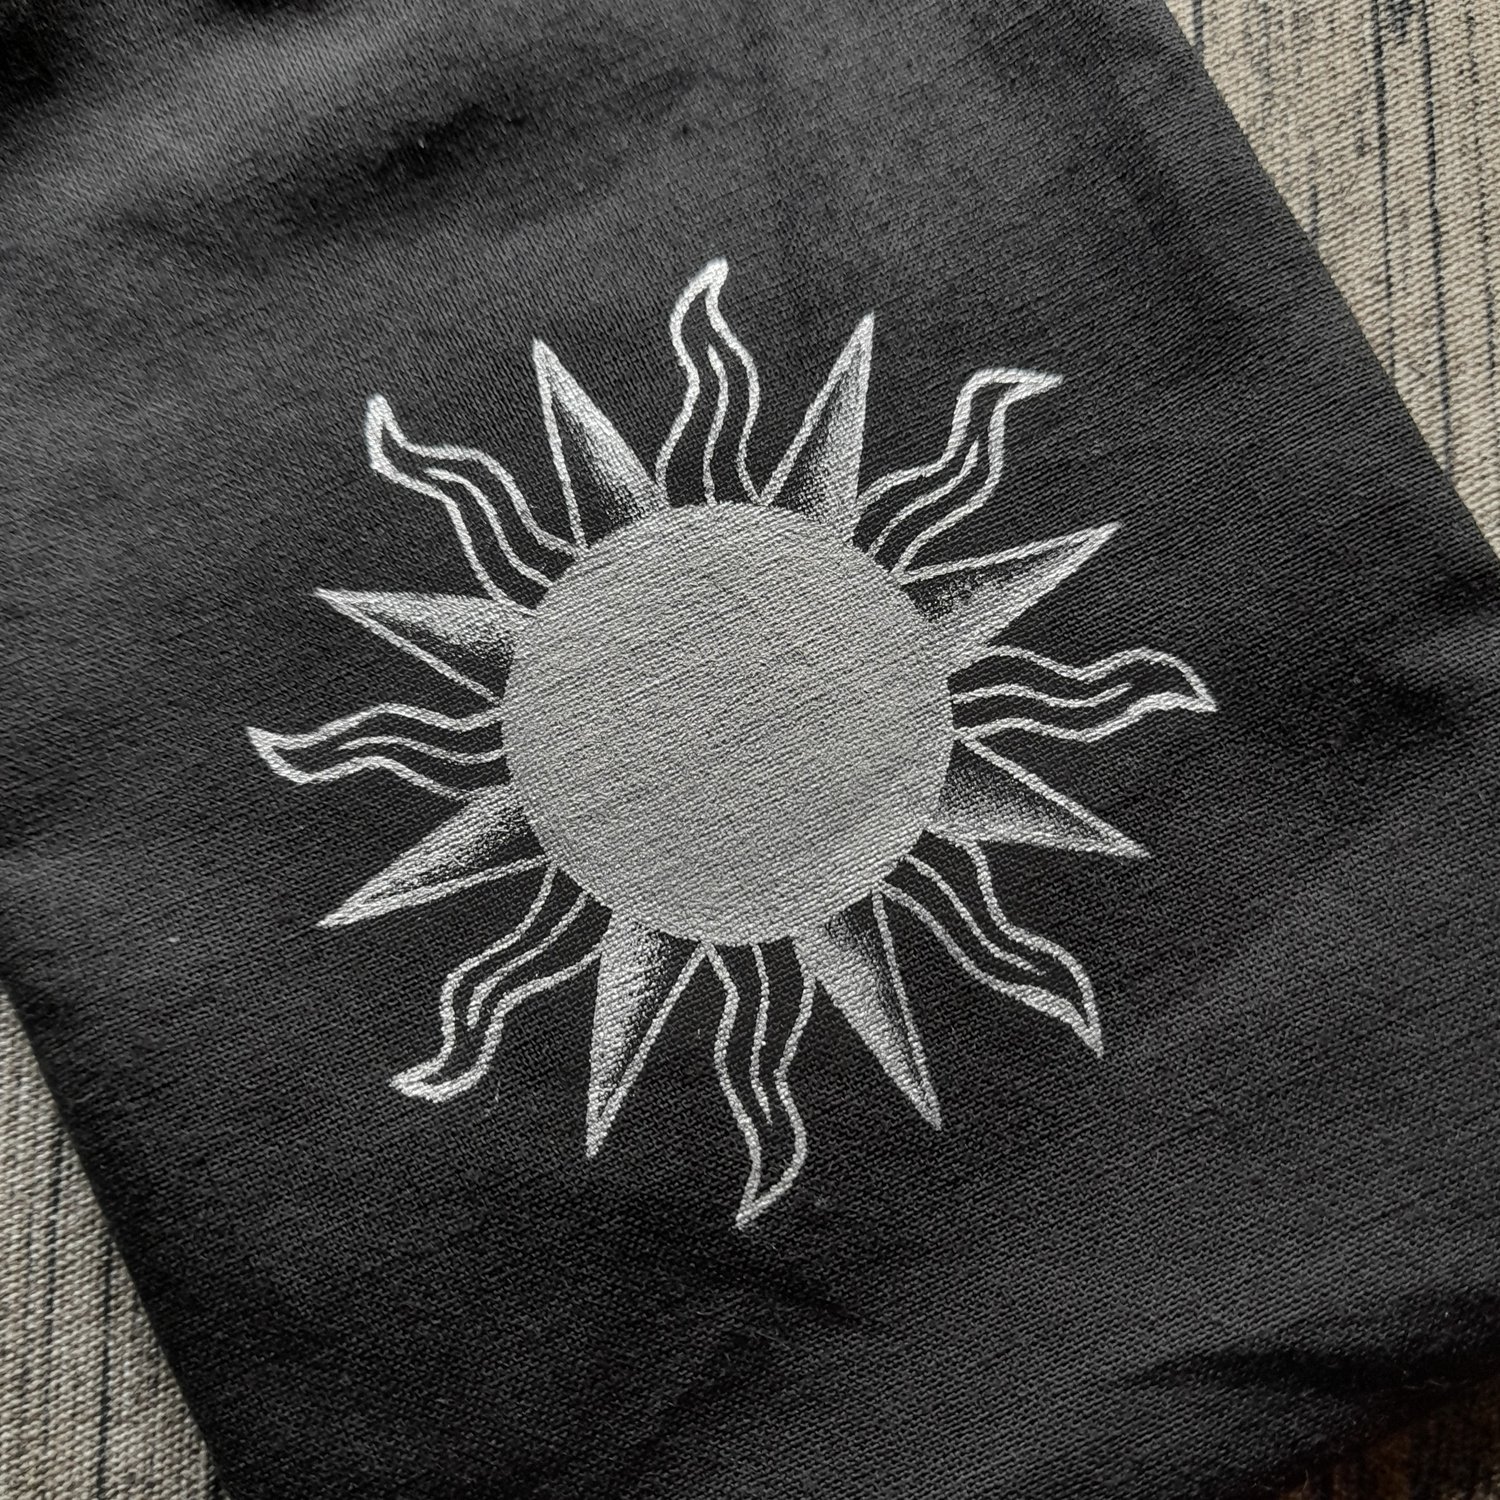 Tarot Card 'The Sun' Embroidery Pattern